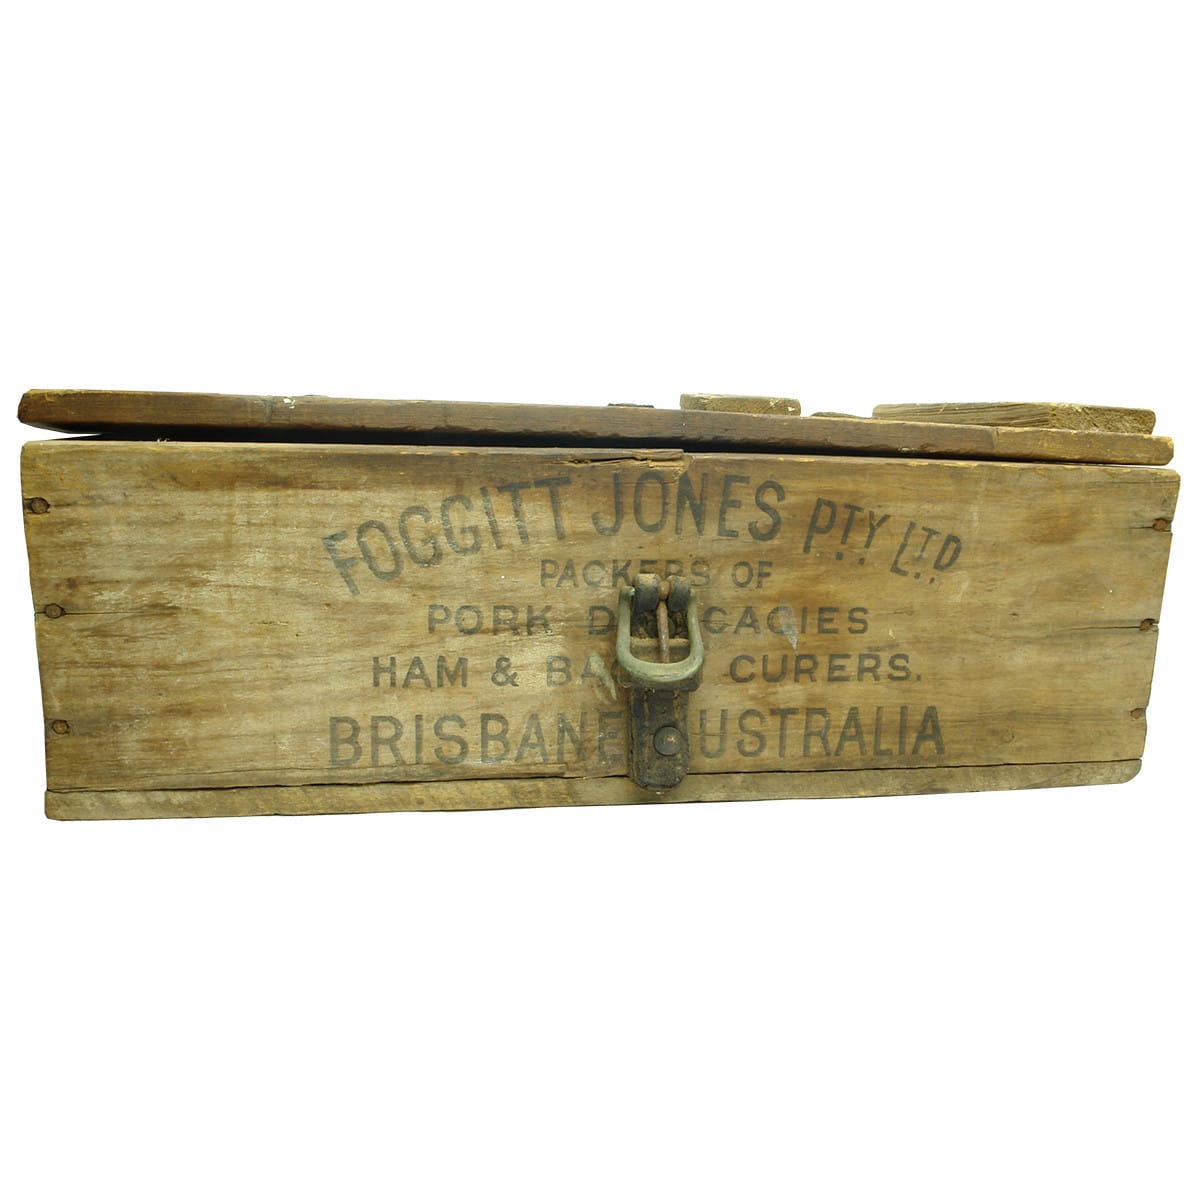 Box. Foggitt Jones, Brisbane, Crate for Ham Pate, 6 Doz. 3 1/2 oz. cans. (Queensland)